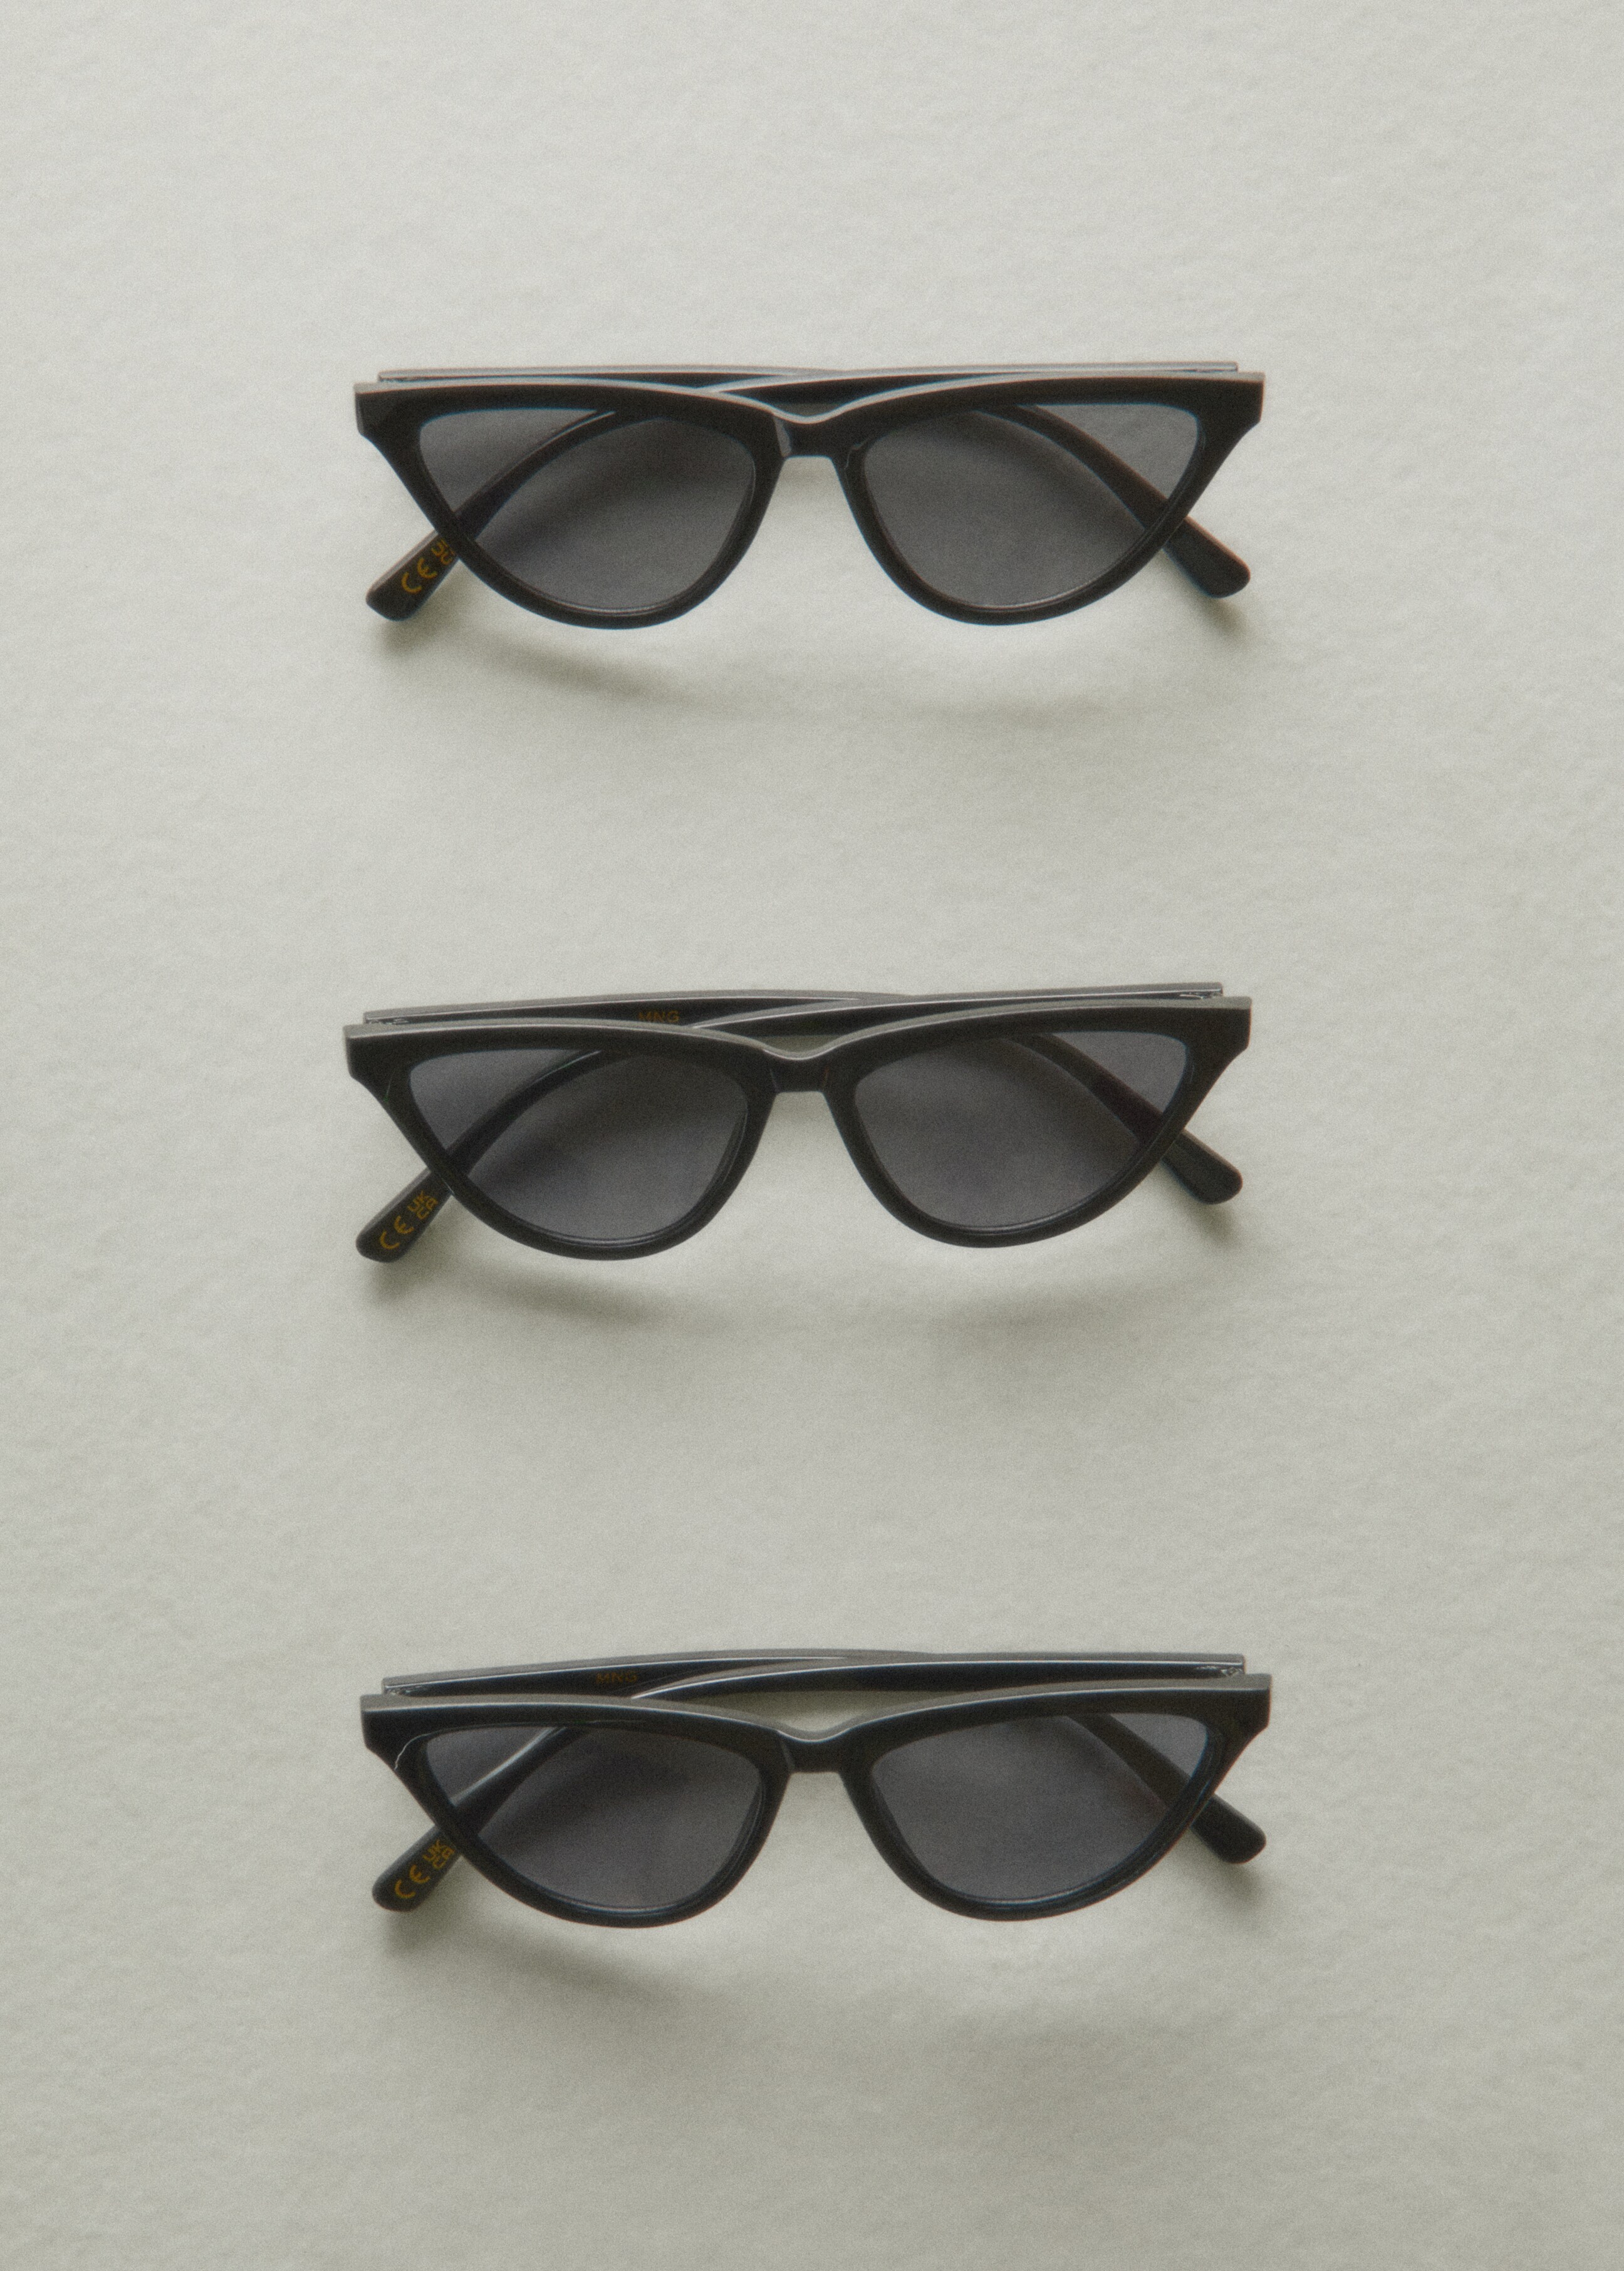 Sunčane naočale retro stila - Detalji artikla 8